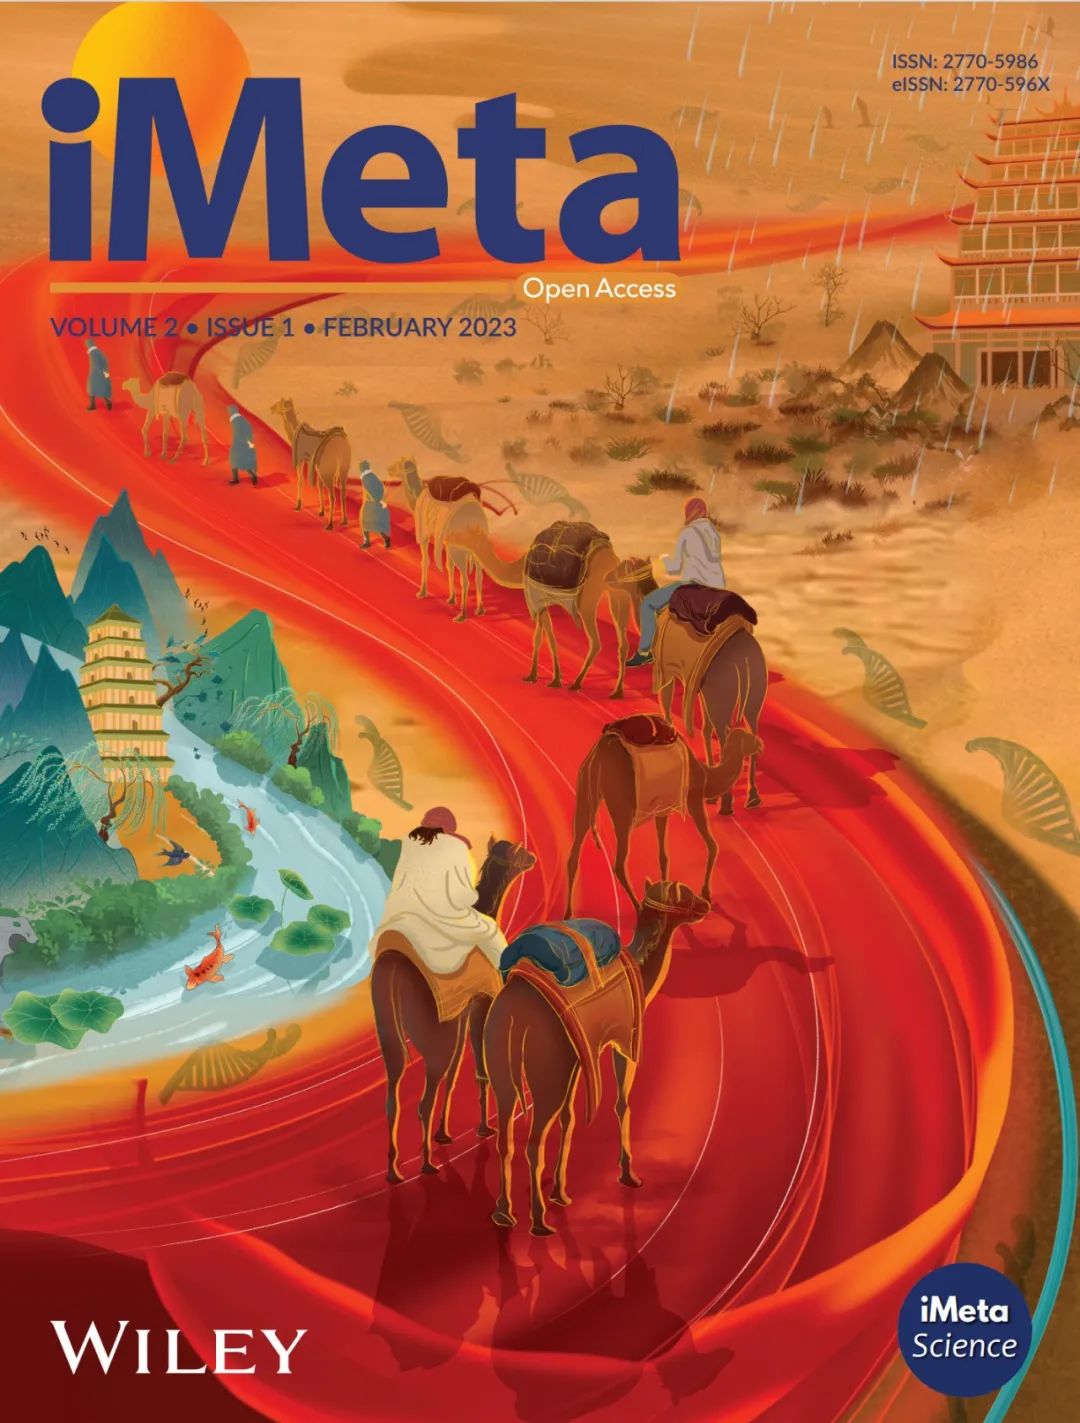 iMeta期刊 第2卷第2期 在线正式发布